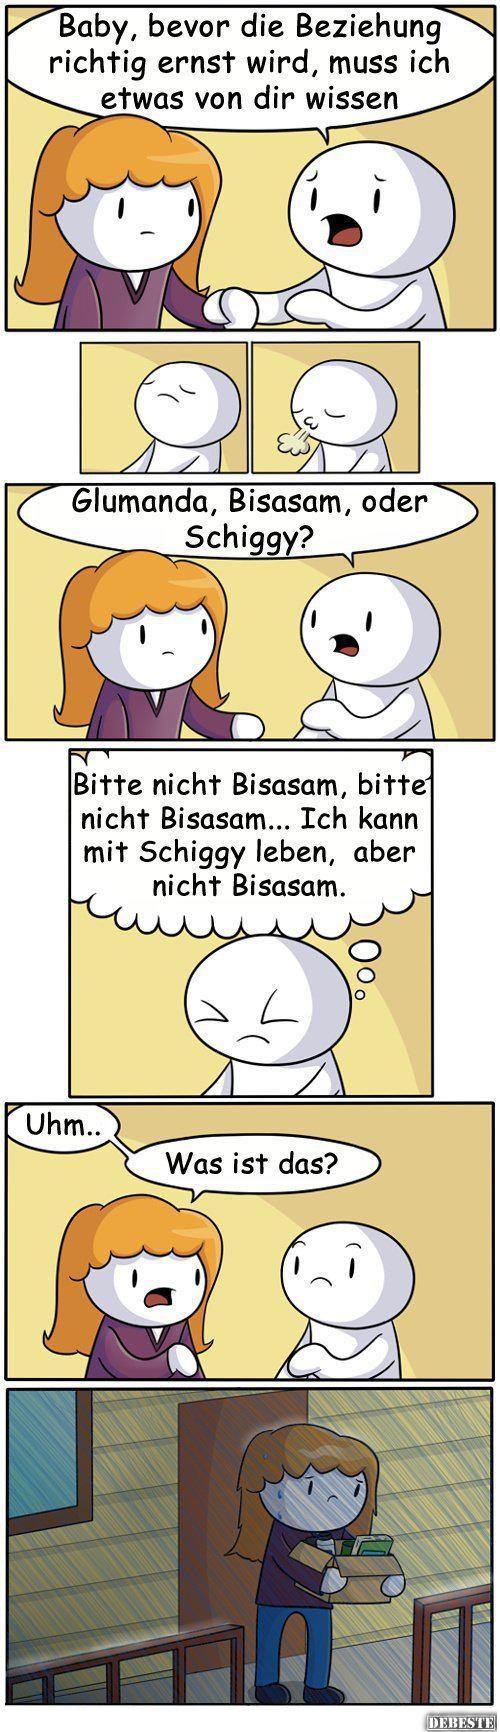 Glumanda, Bisasam oder Schiggy? - Lustige Bilder | DEBESTE.de